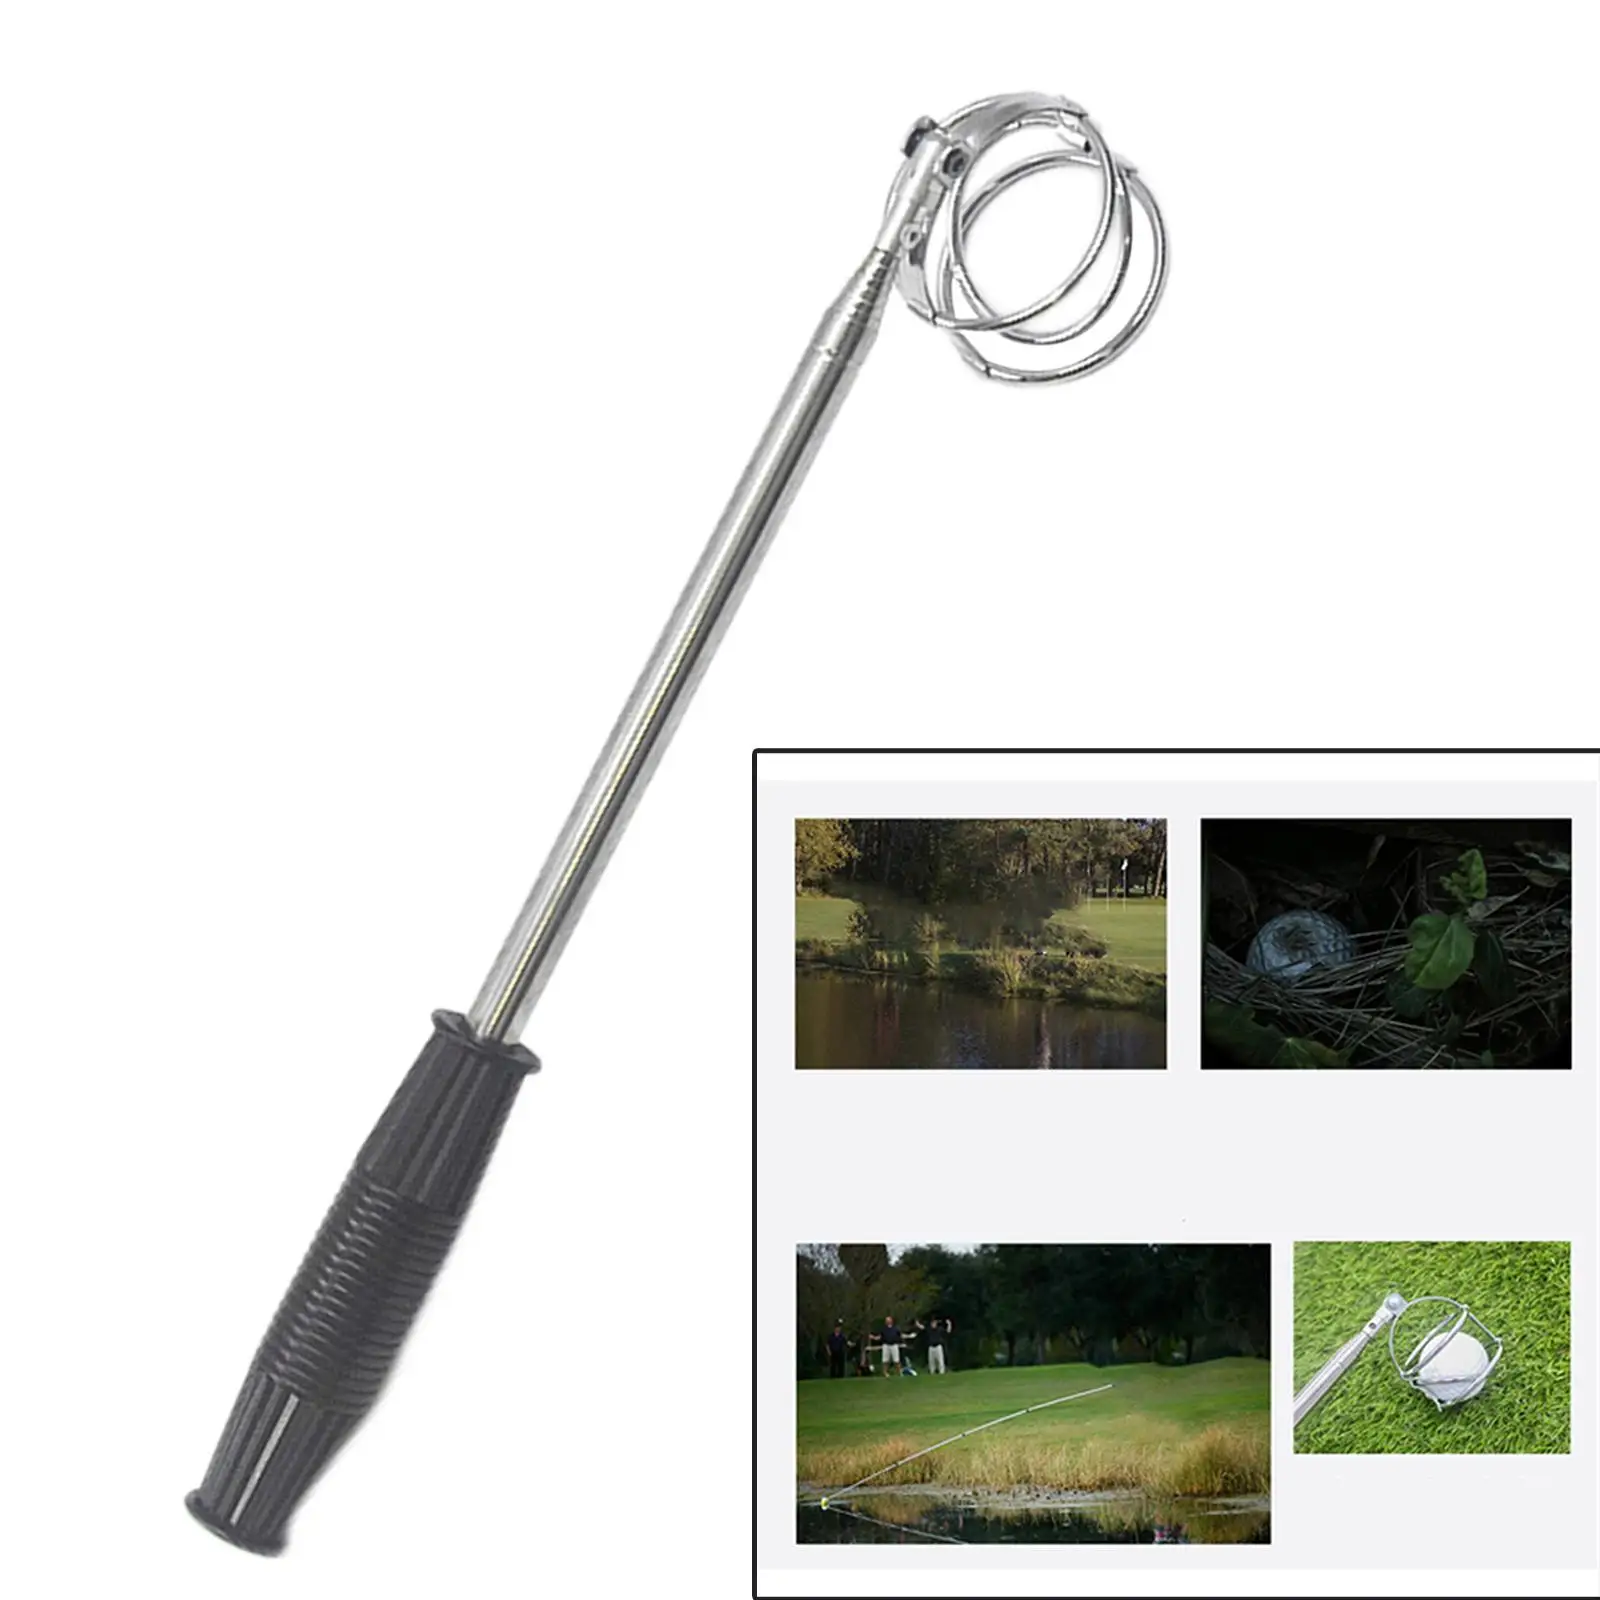 Portable Golf Ball Retriever Grabber Stainless Steel Shaft Tool 8 Section Ball Pick up Picker Telescopic for Water